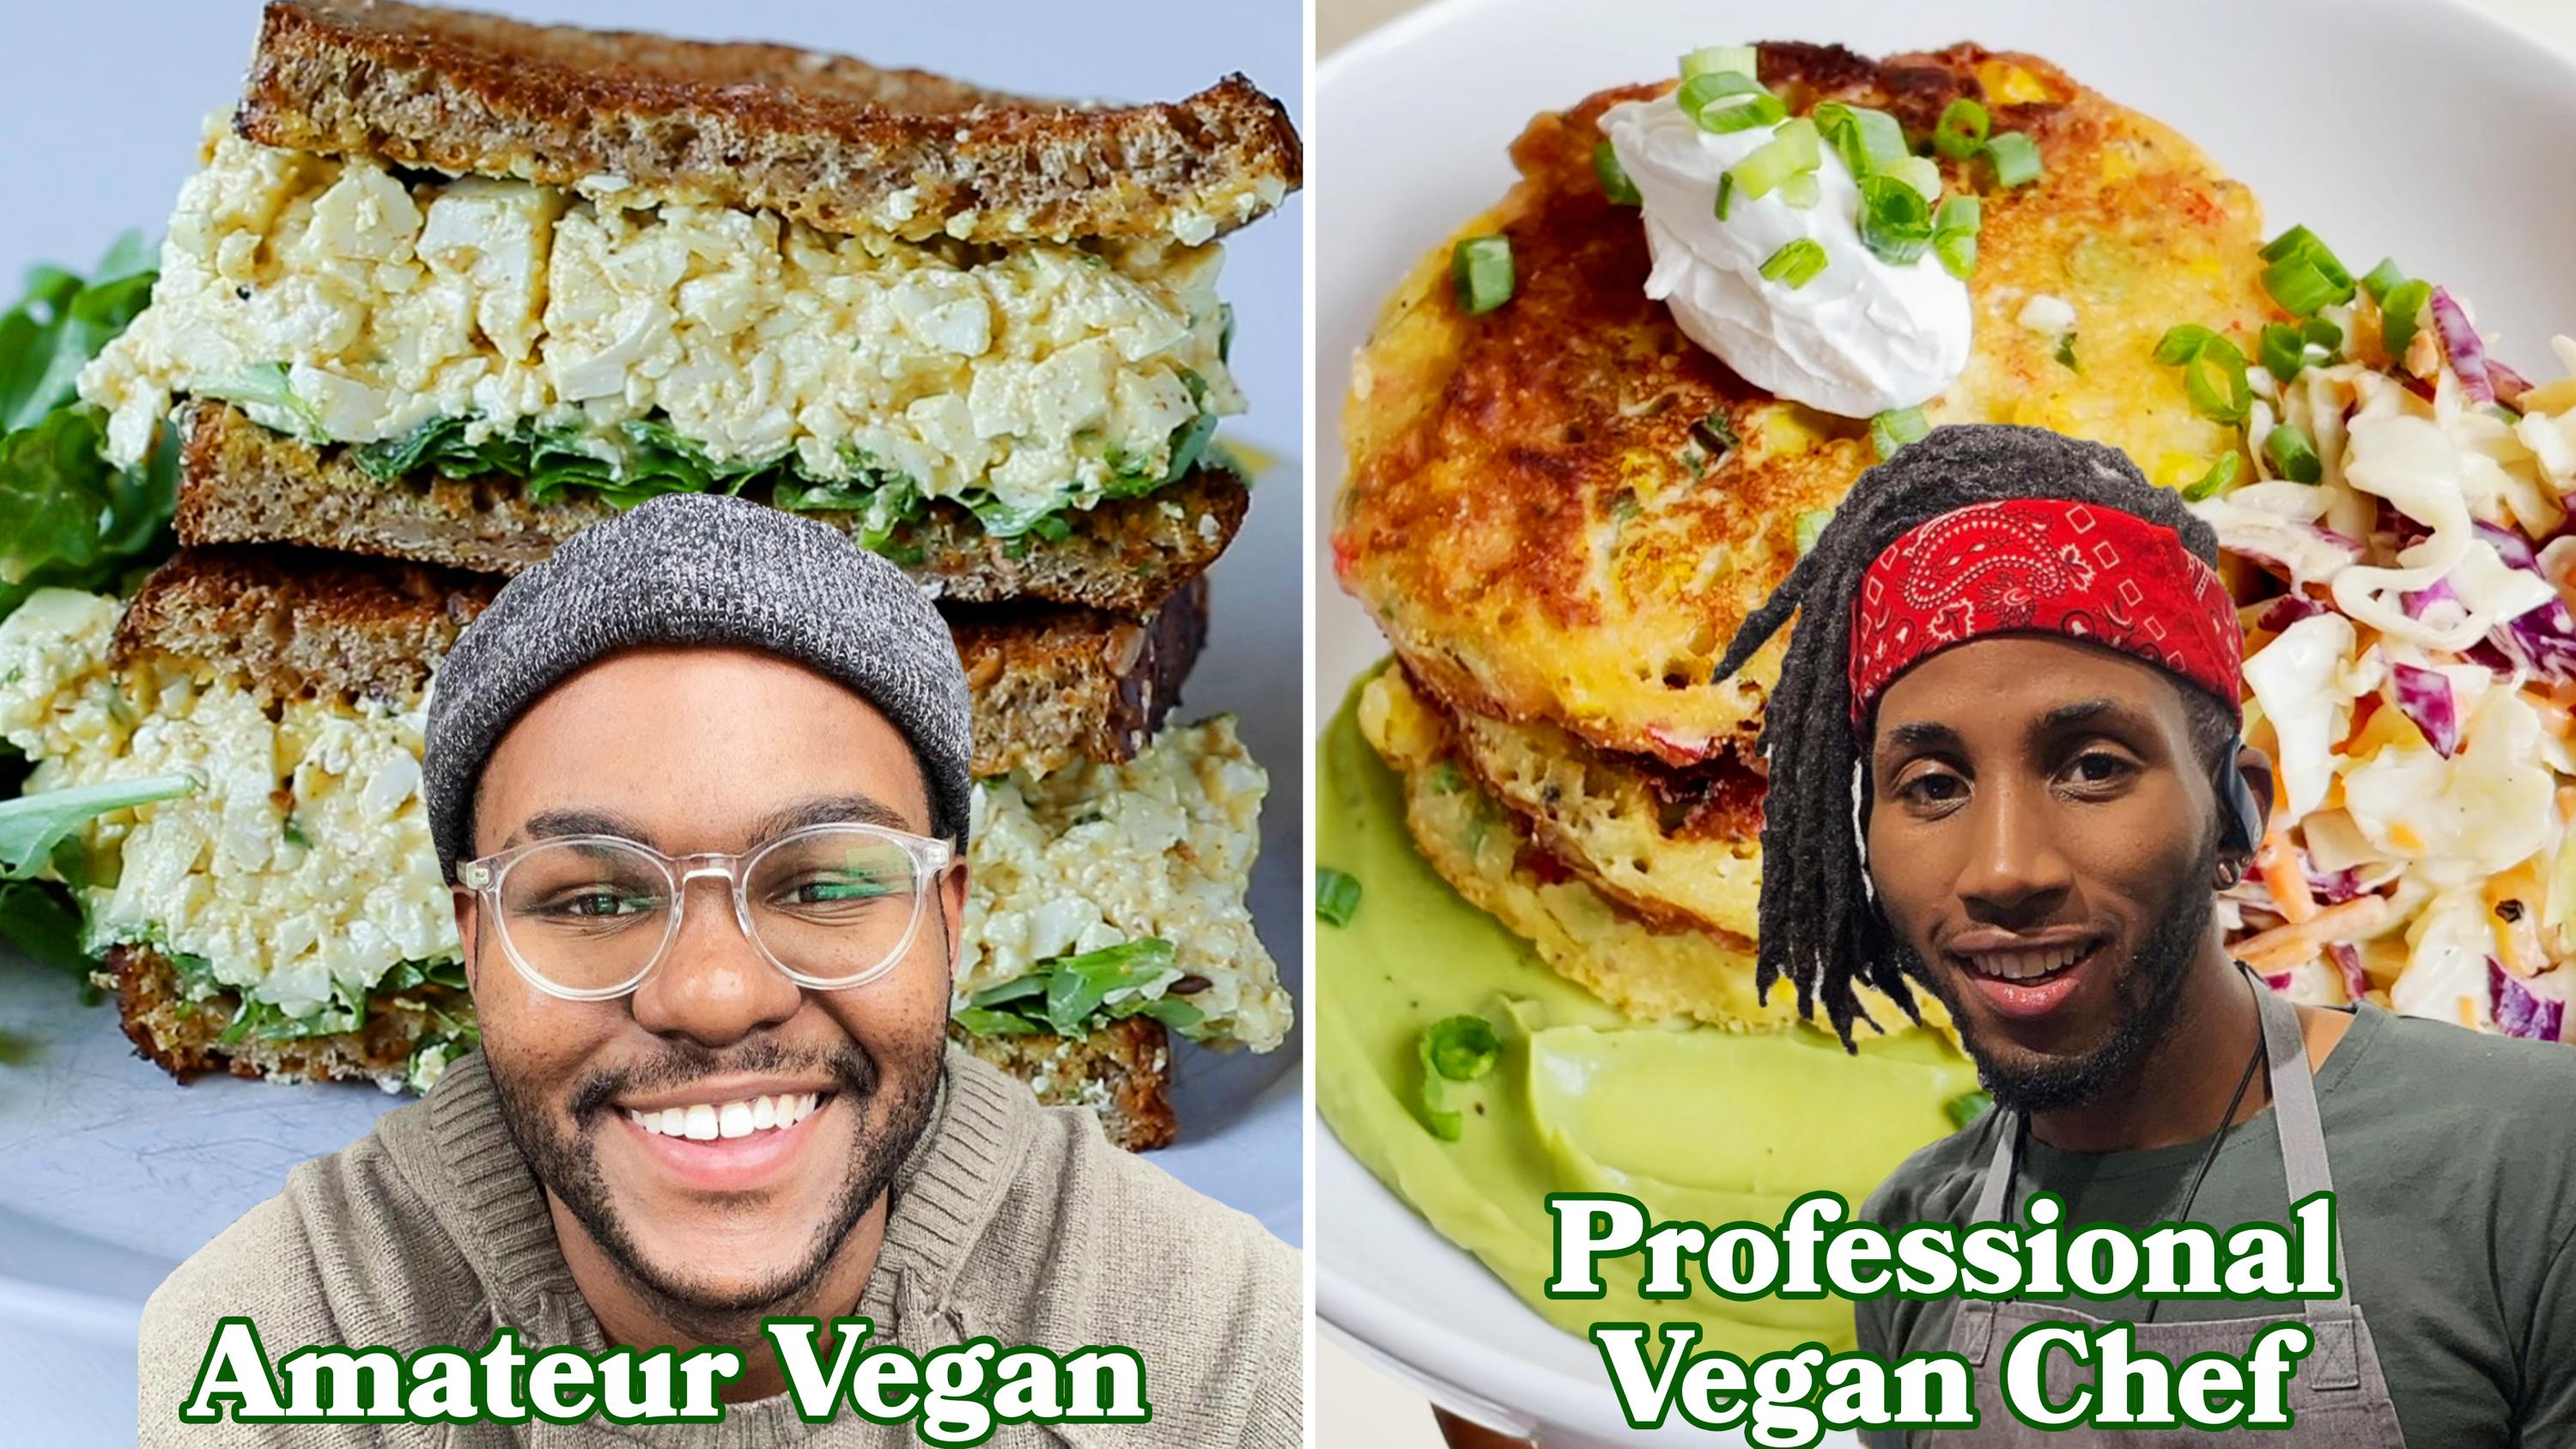 What An Amateur Vegan Vegan Home Cook And Professional Vegan Chef Eat 